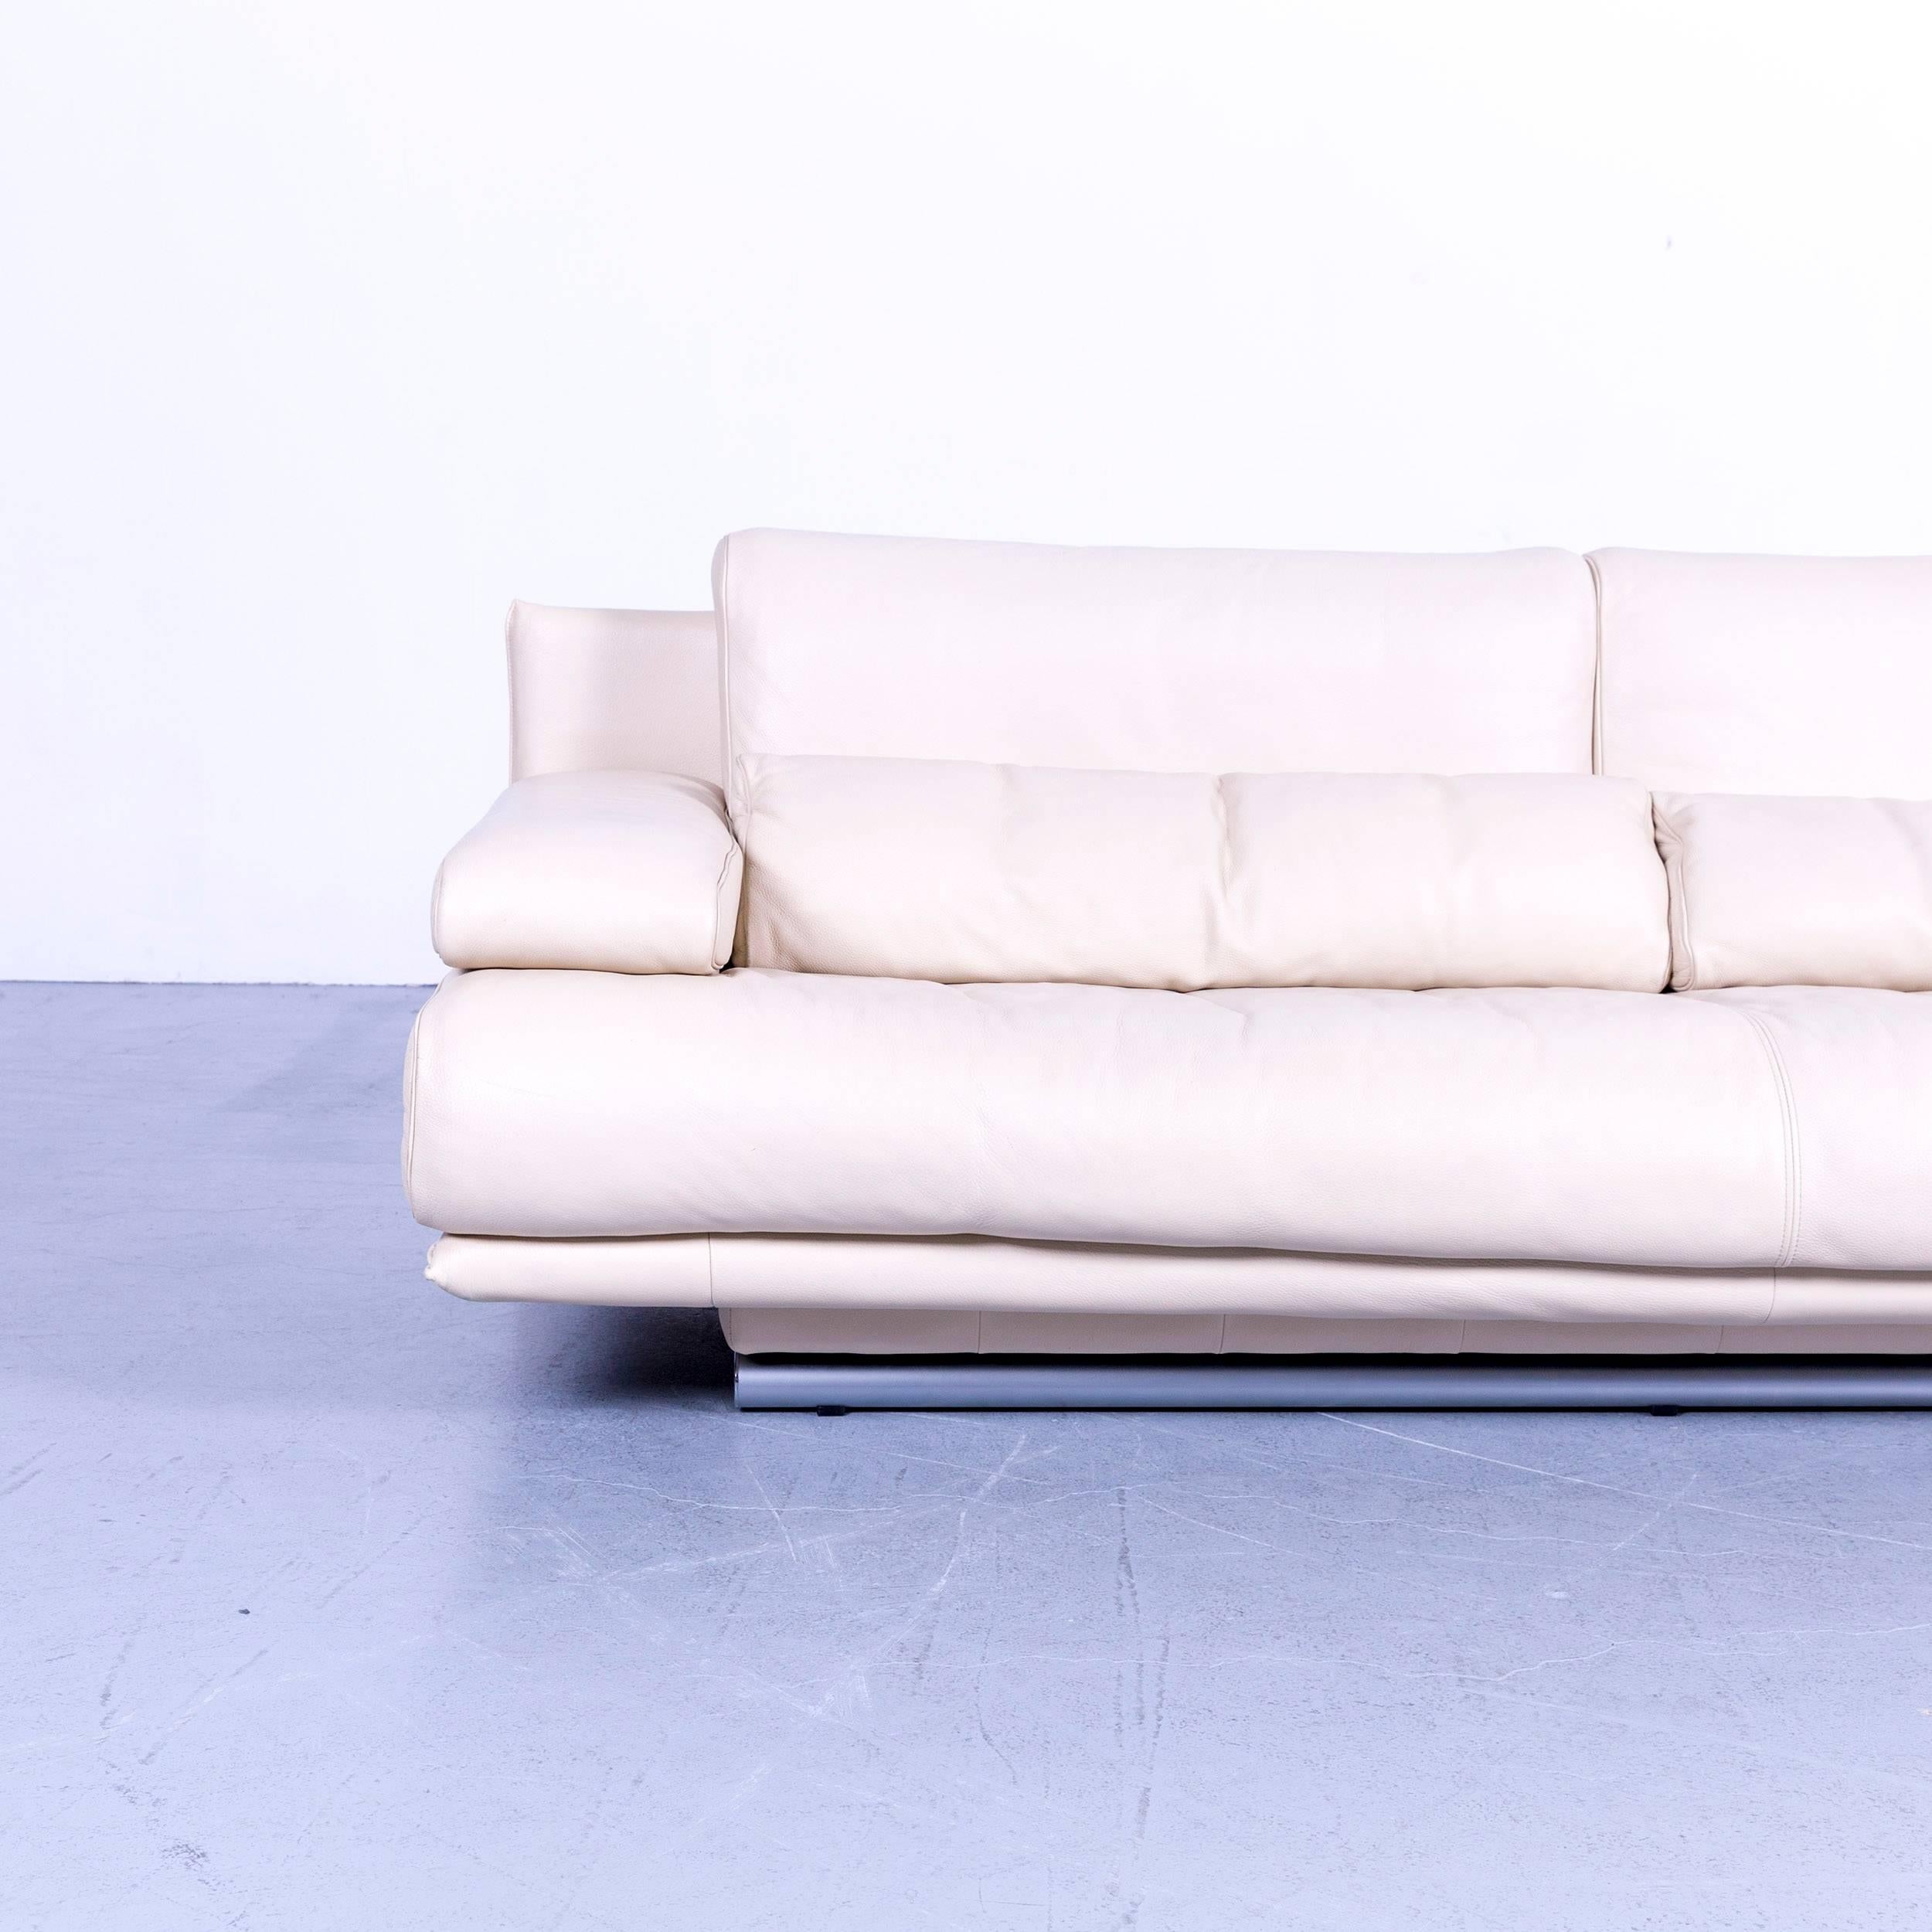 German Rolf Benz 6500 Designer Sofa, Off-White Leather Three-Seat, Modern